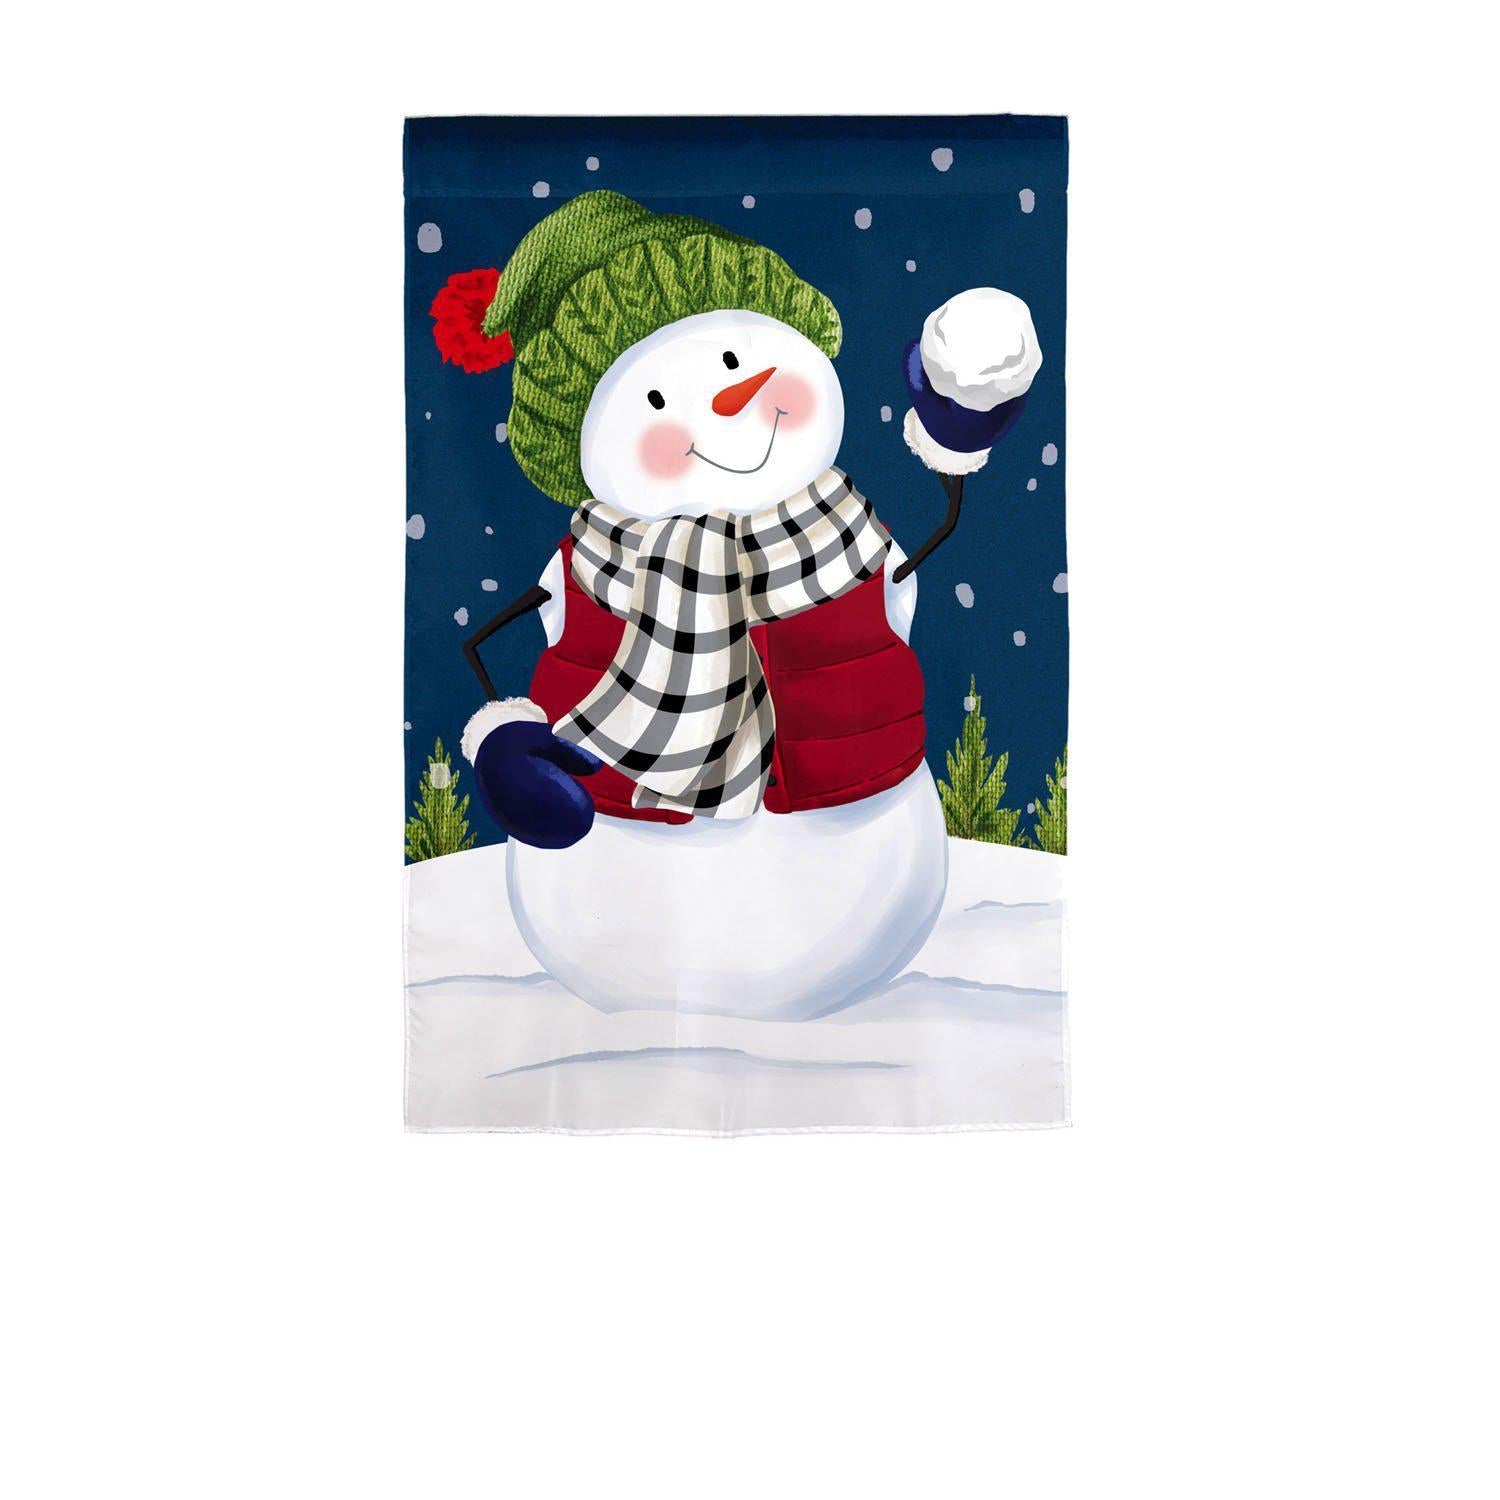 The Snow Fun garden flag features a happy snowman preparing to toss a snowball. 